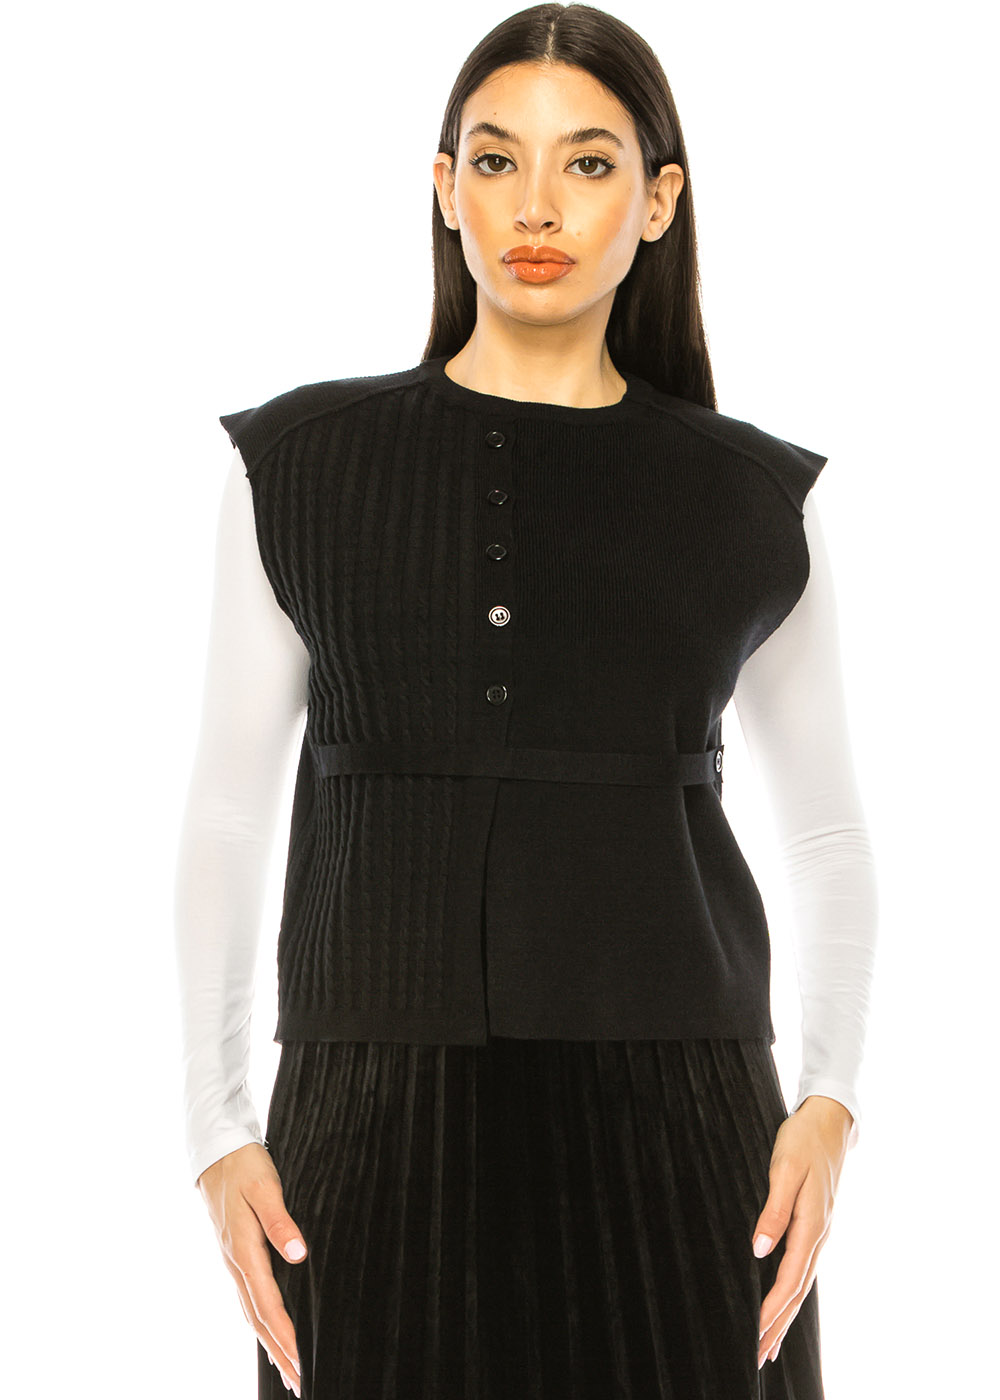 Sleek Black Vest in Mixed Knit Design